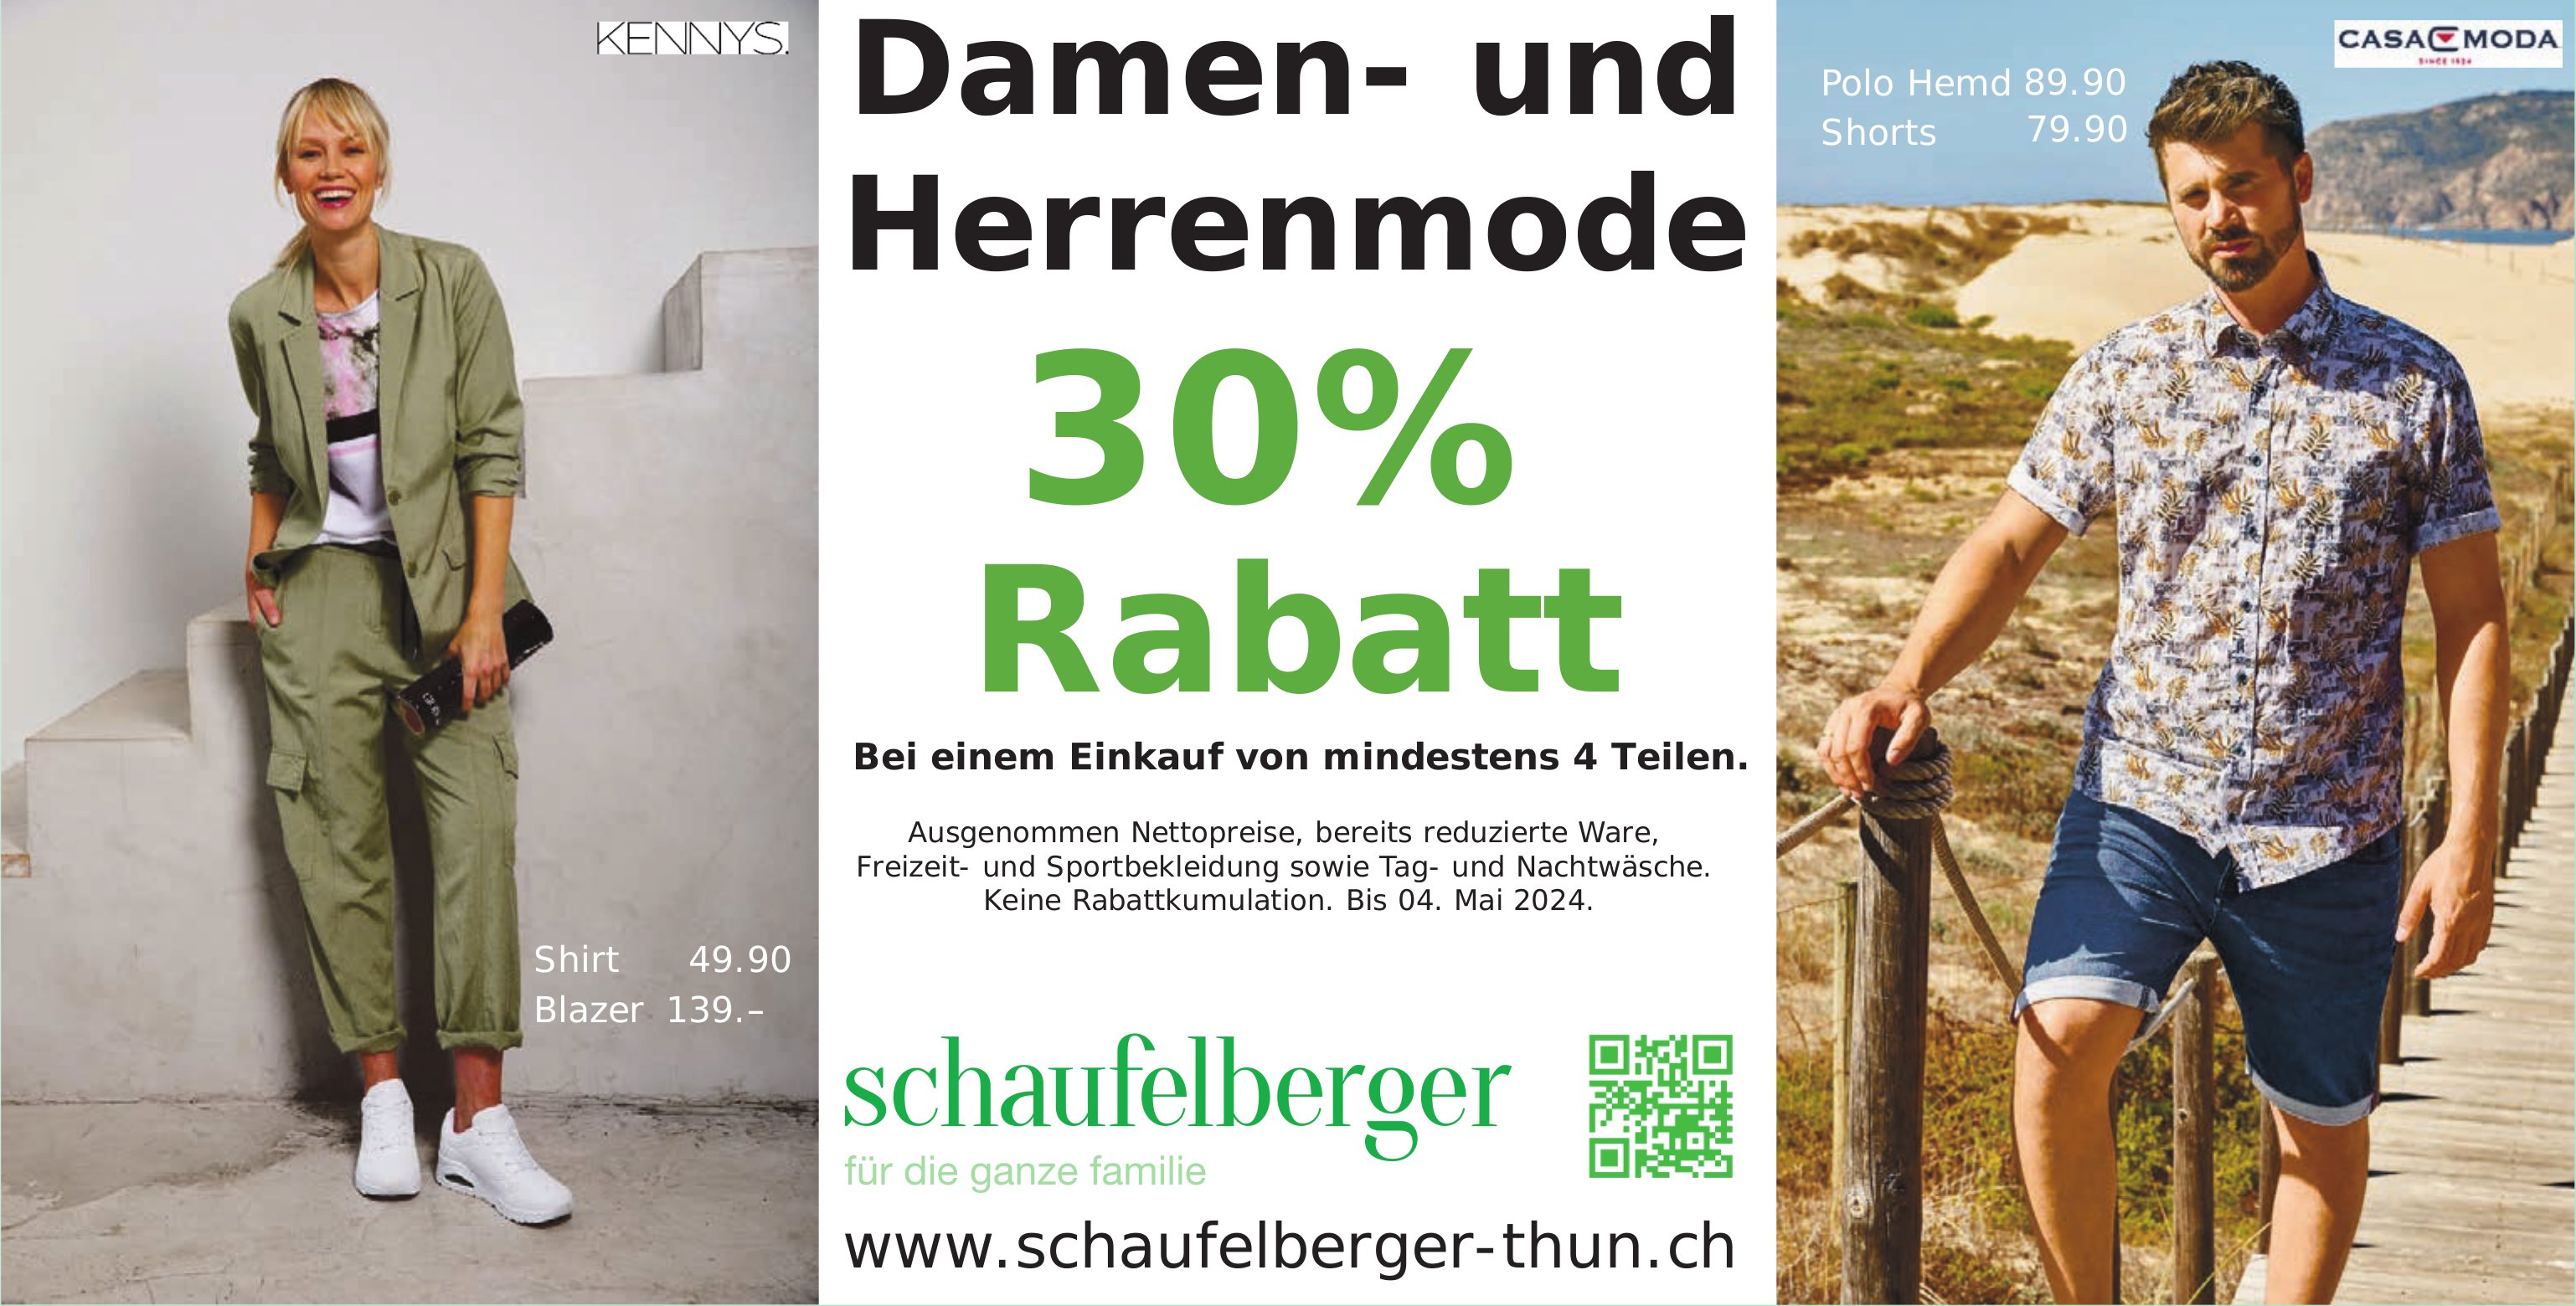 Schaufelberger, Thun - Damen- und Herrenmode, 30% Rabatt